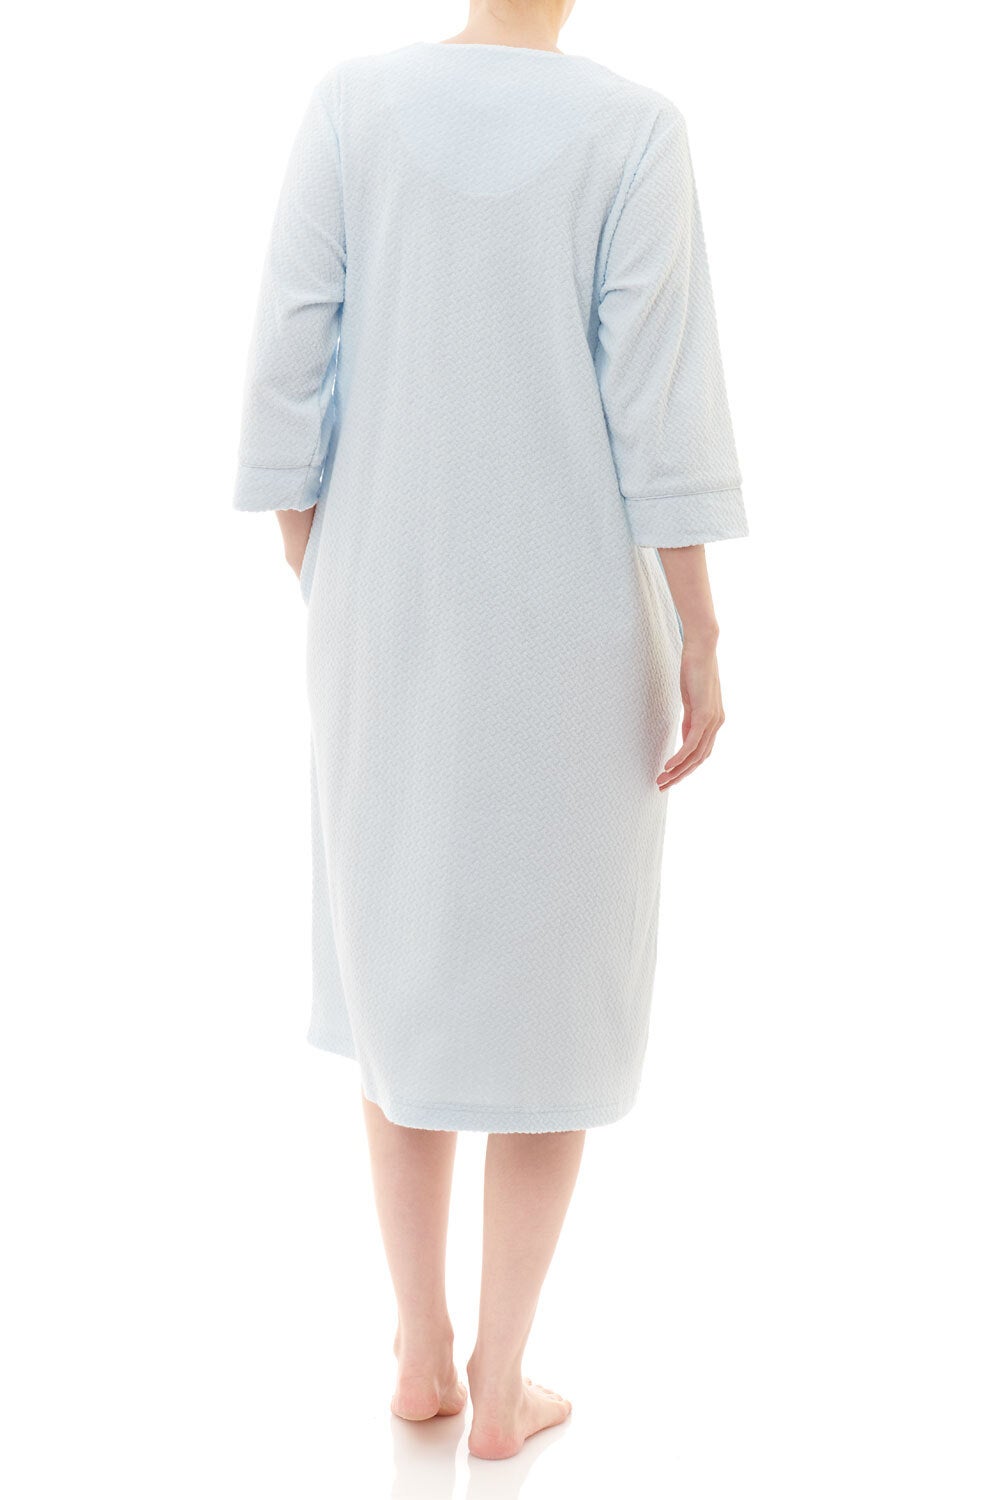 Ladies White Cotton Housecoat Nightdress Robe Dressing Gown Button Front  Superfine Shadow Stripe 100% Cotton (X-Small) : Amazon.co.uk: Fashion